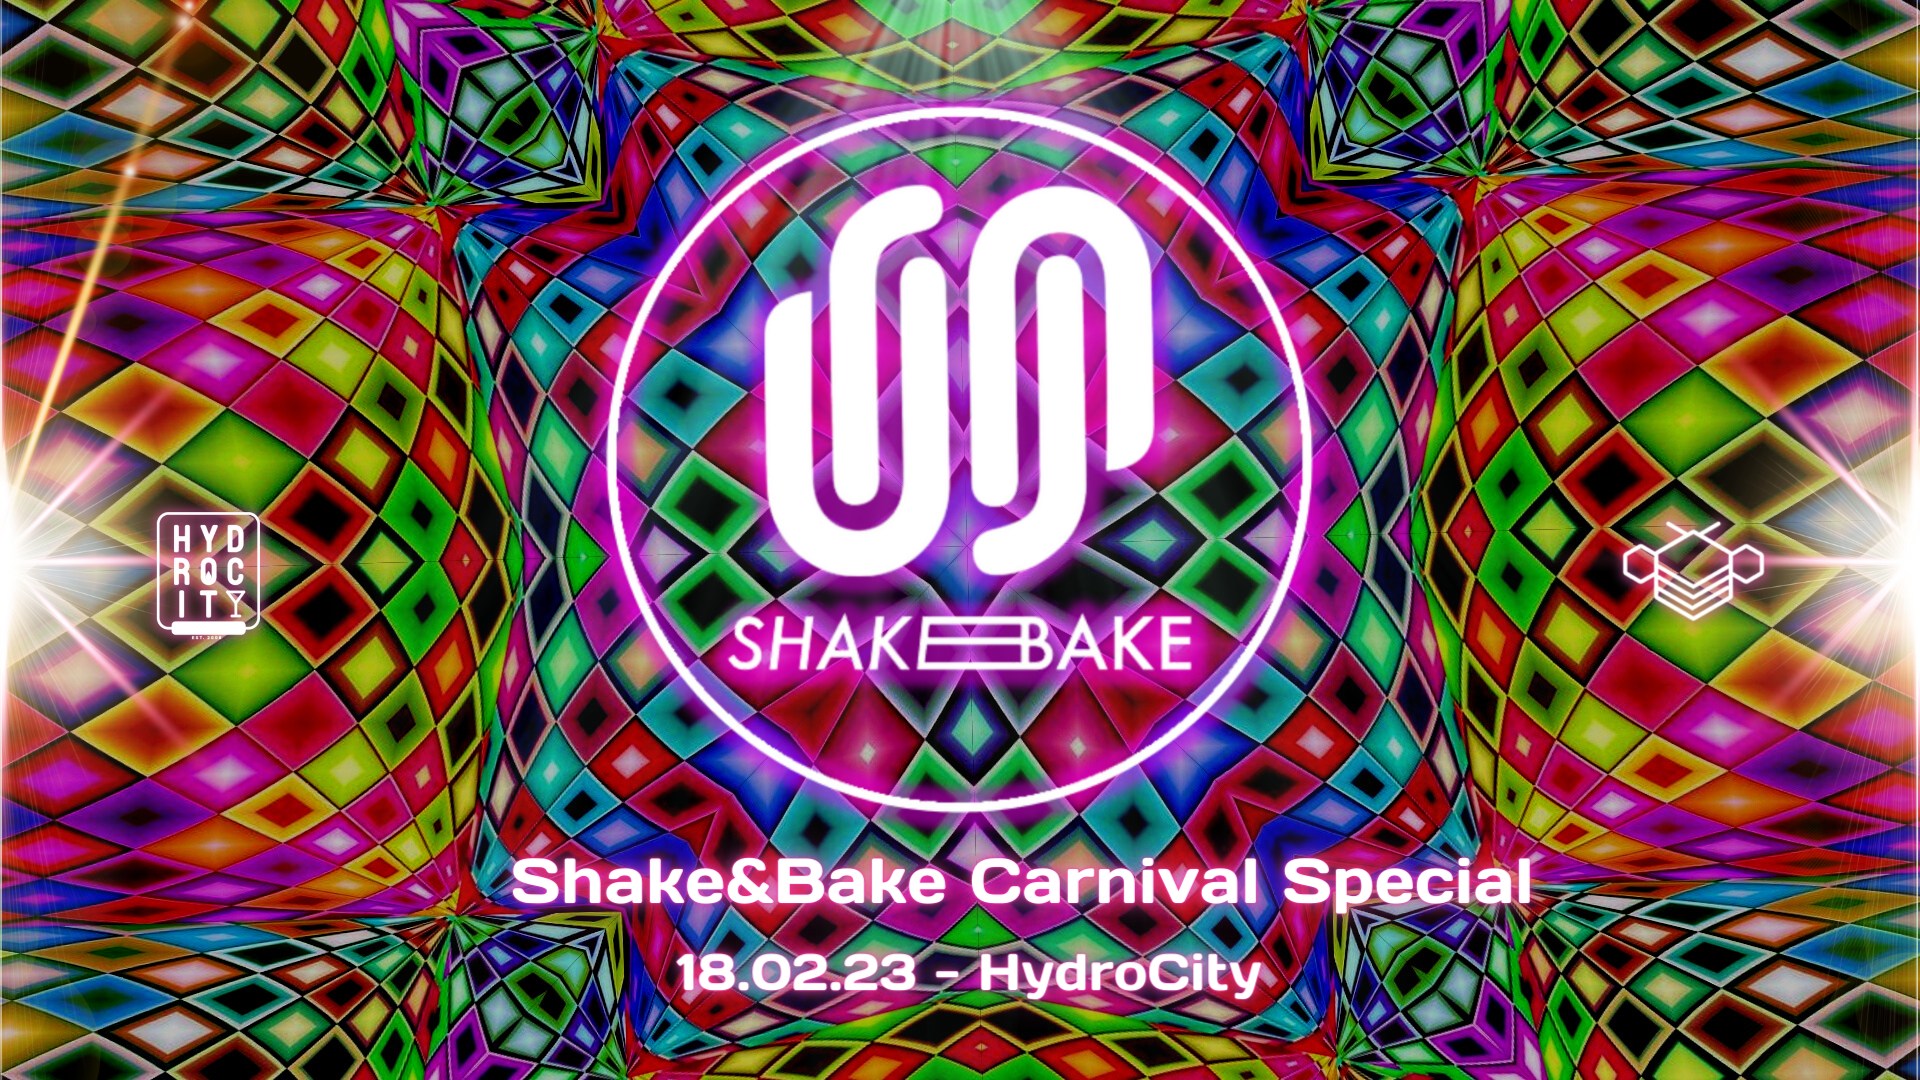 Shake&Bake, Carnival Special, HydroCity, trieste